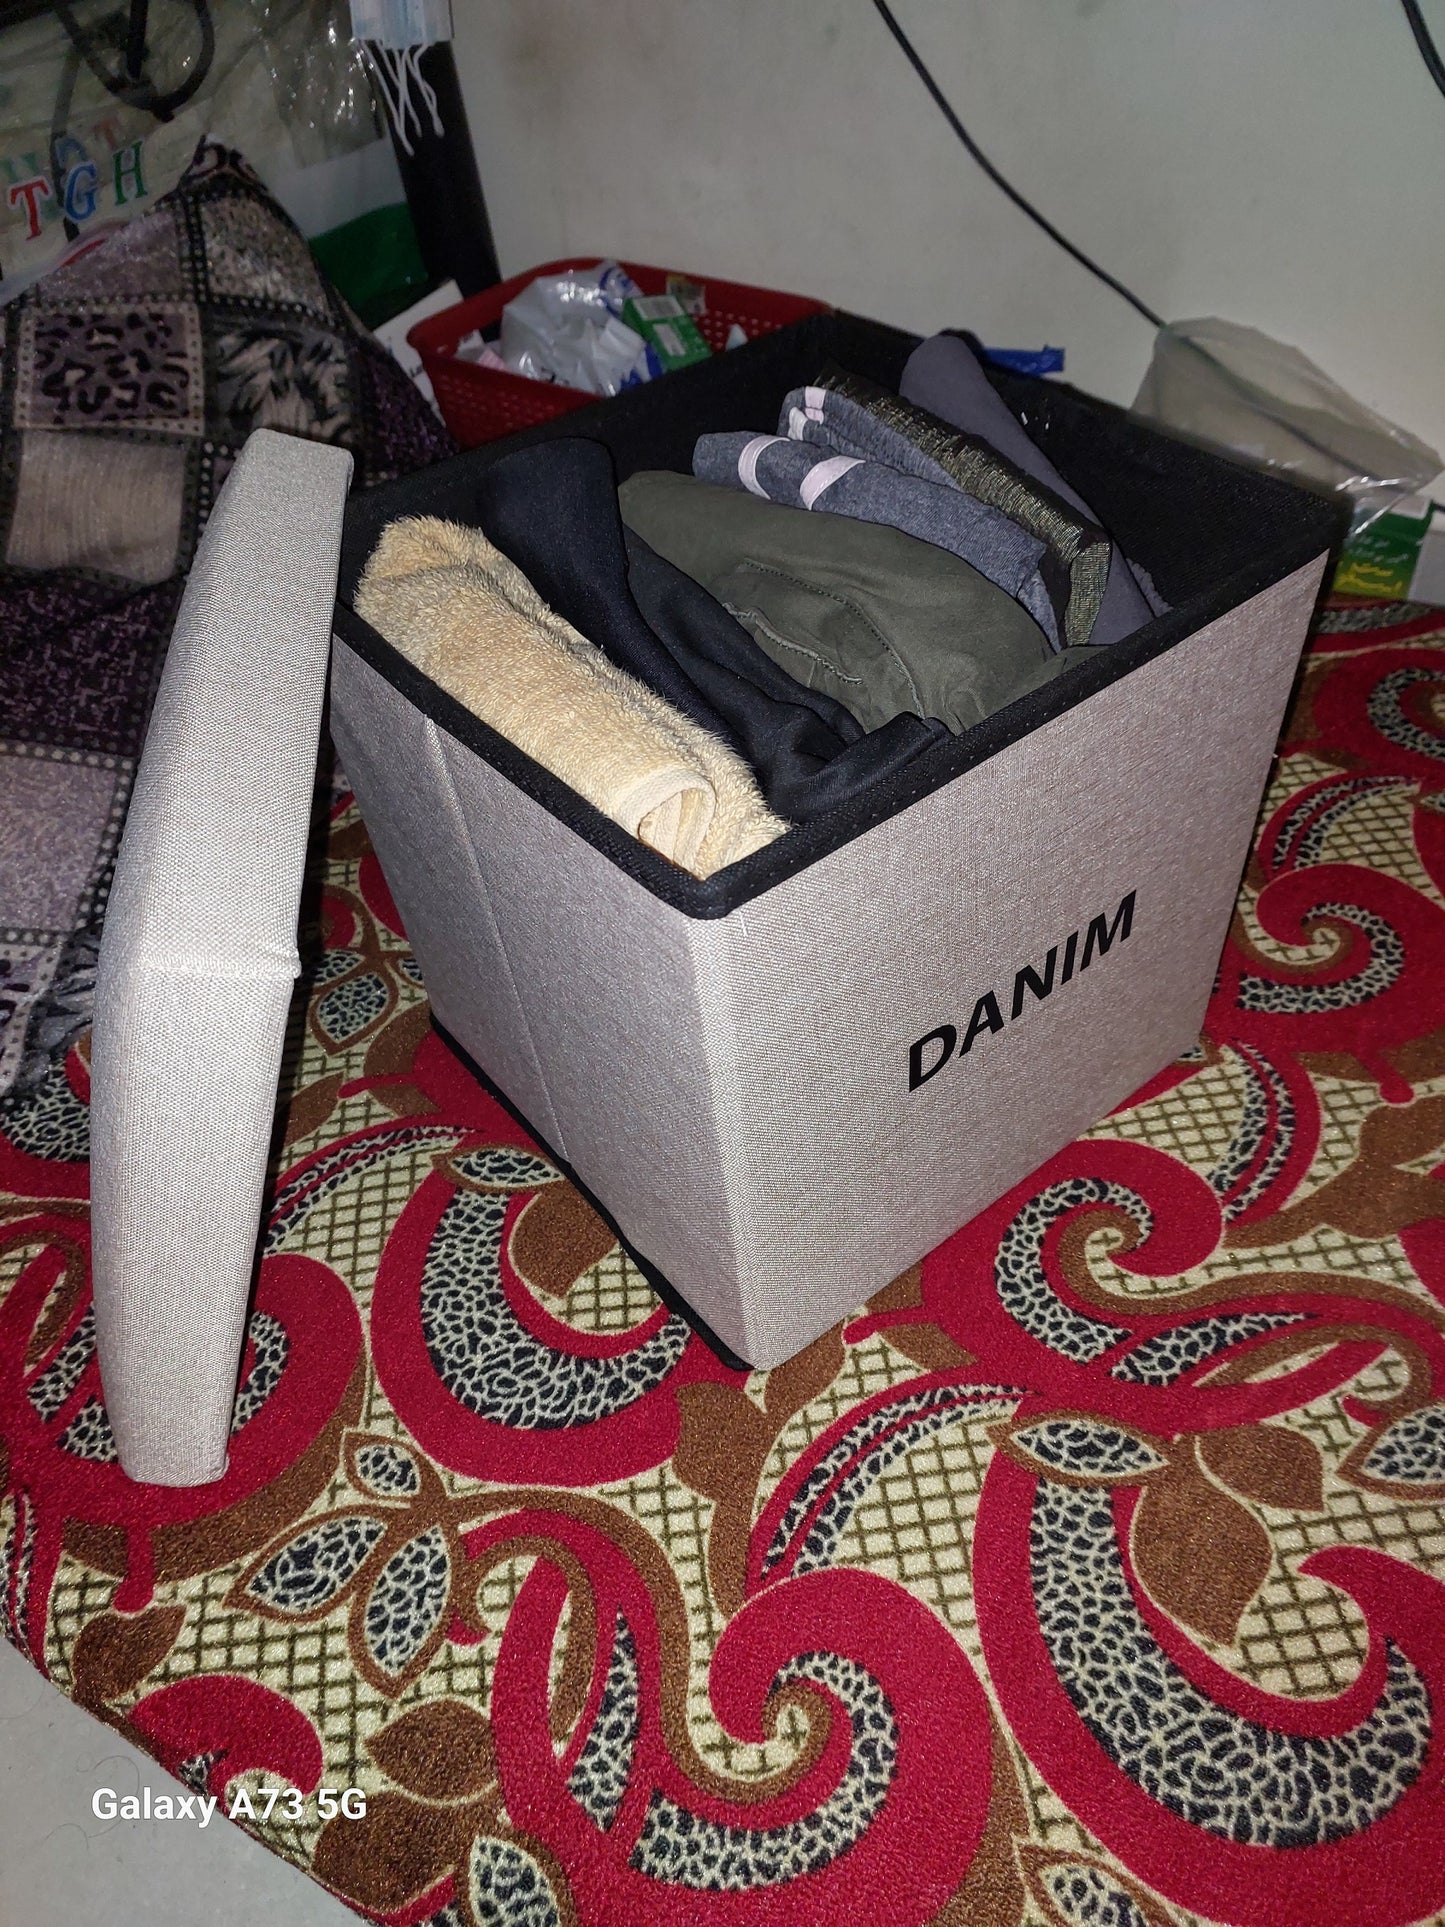 DANIM Cloth Storage Box Multifunctional Foldable Storage Box Item Storage Shoe Changing Stool Fabric Clothes Storage Box